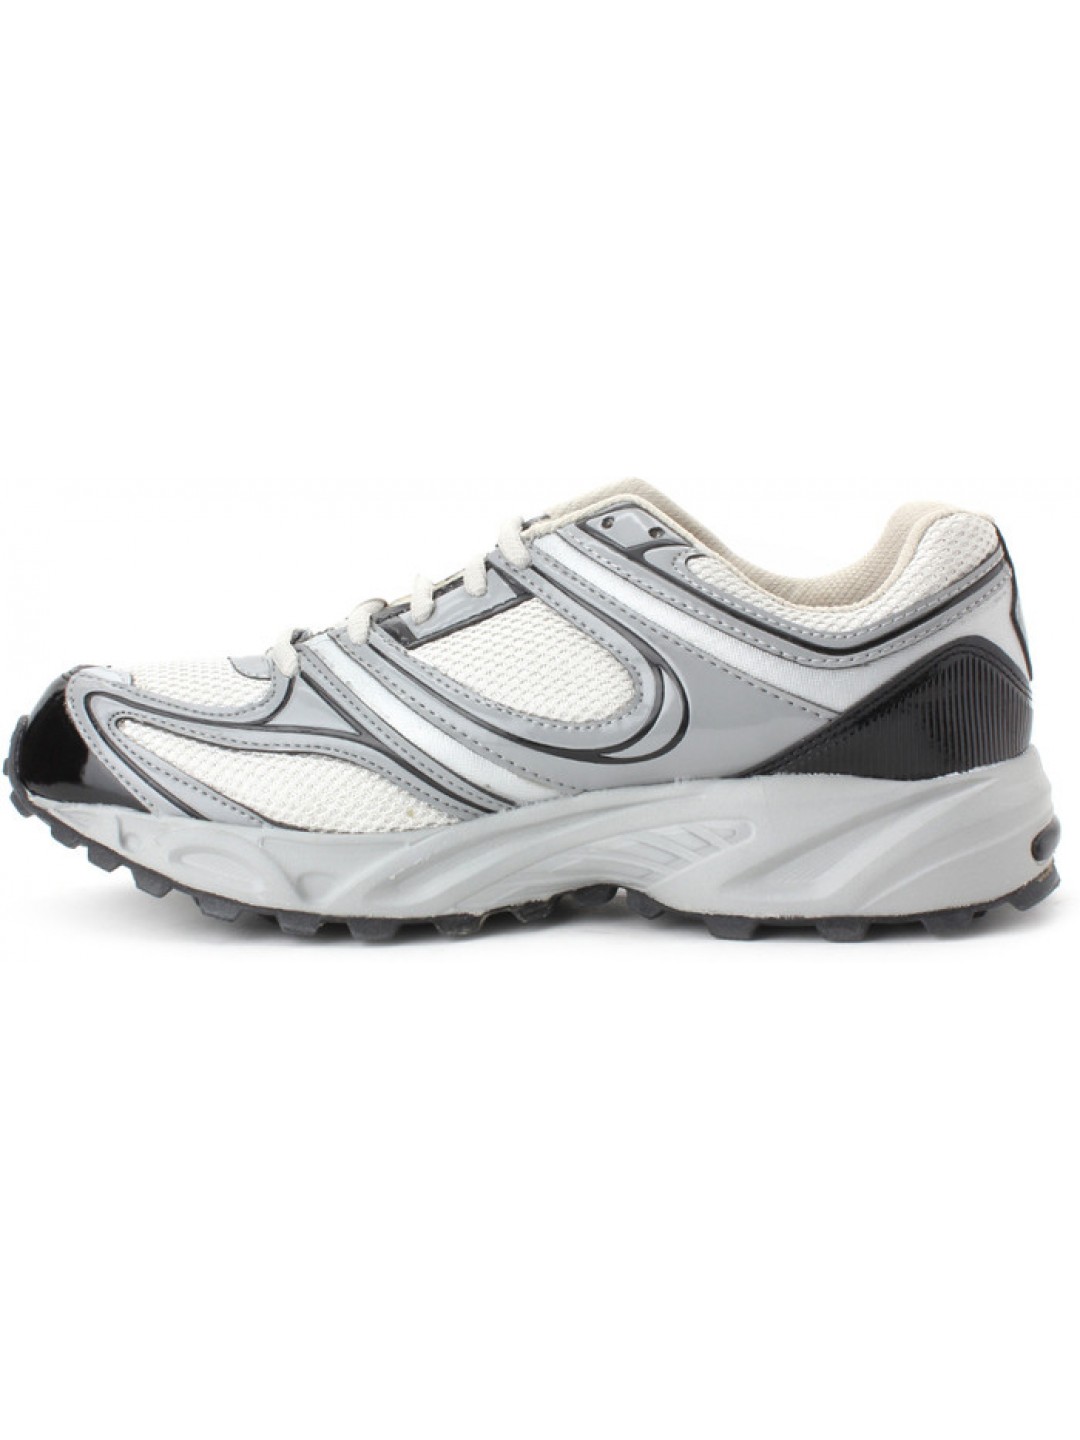 \u0026 Silver Running Shoes SM118-LG-SL